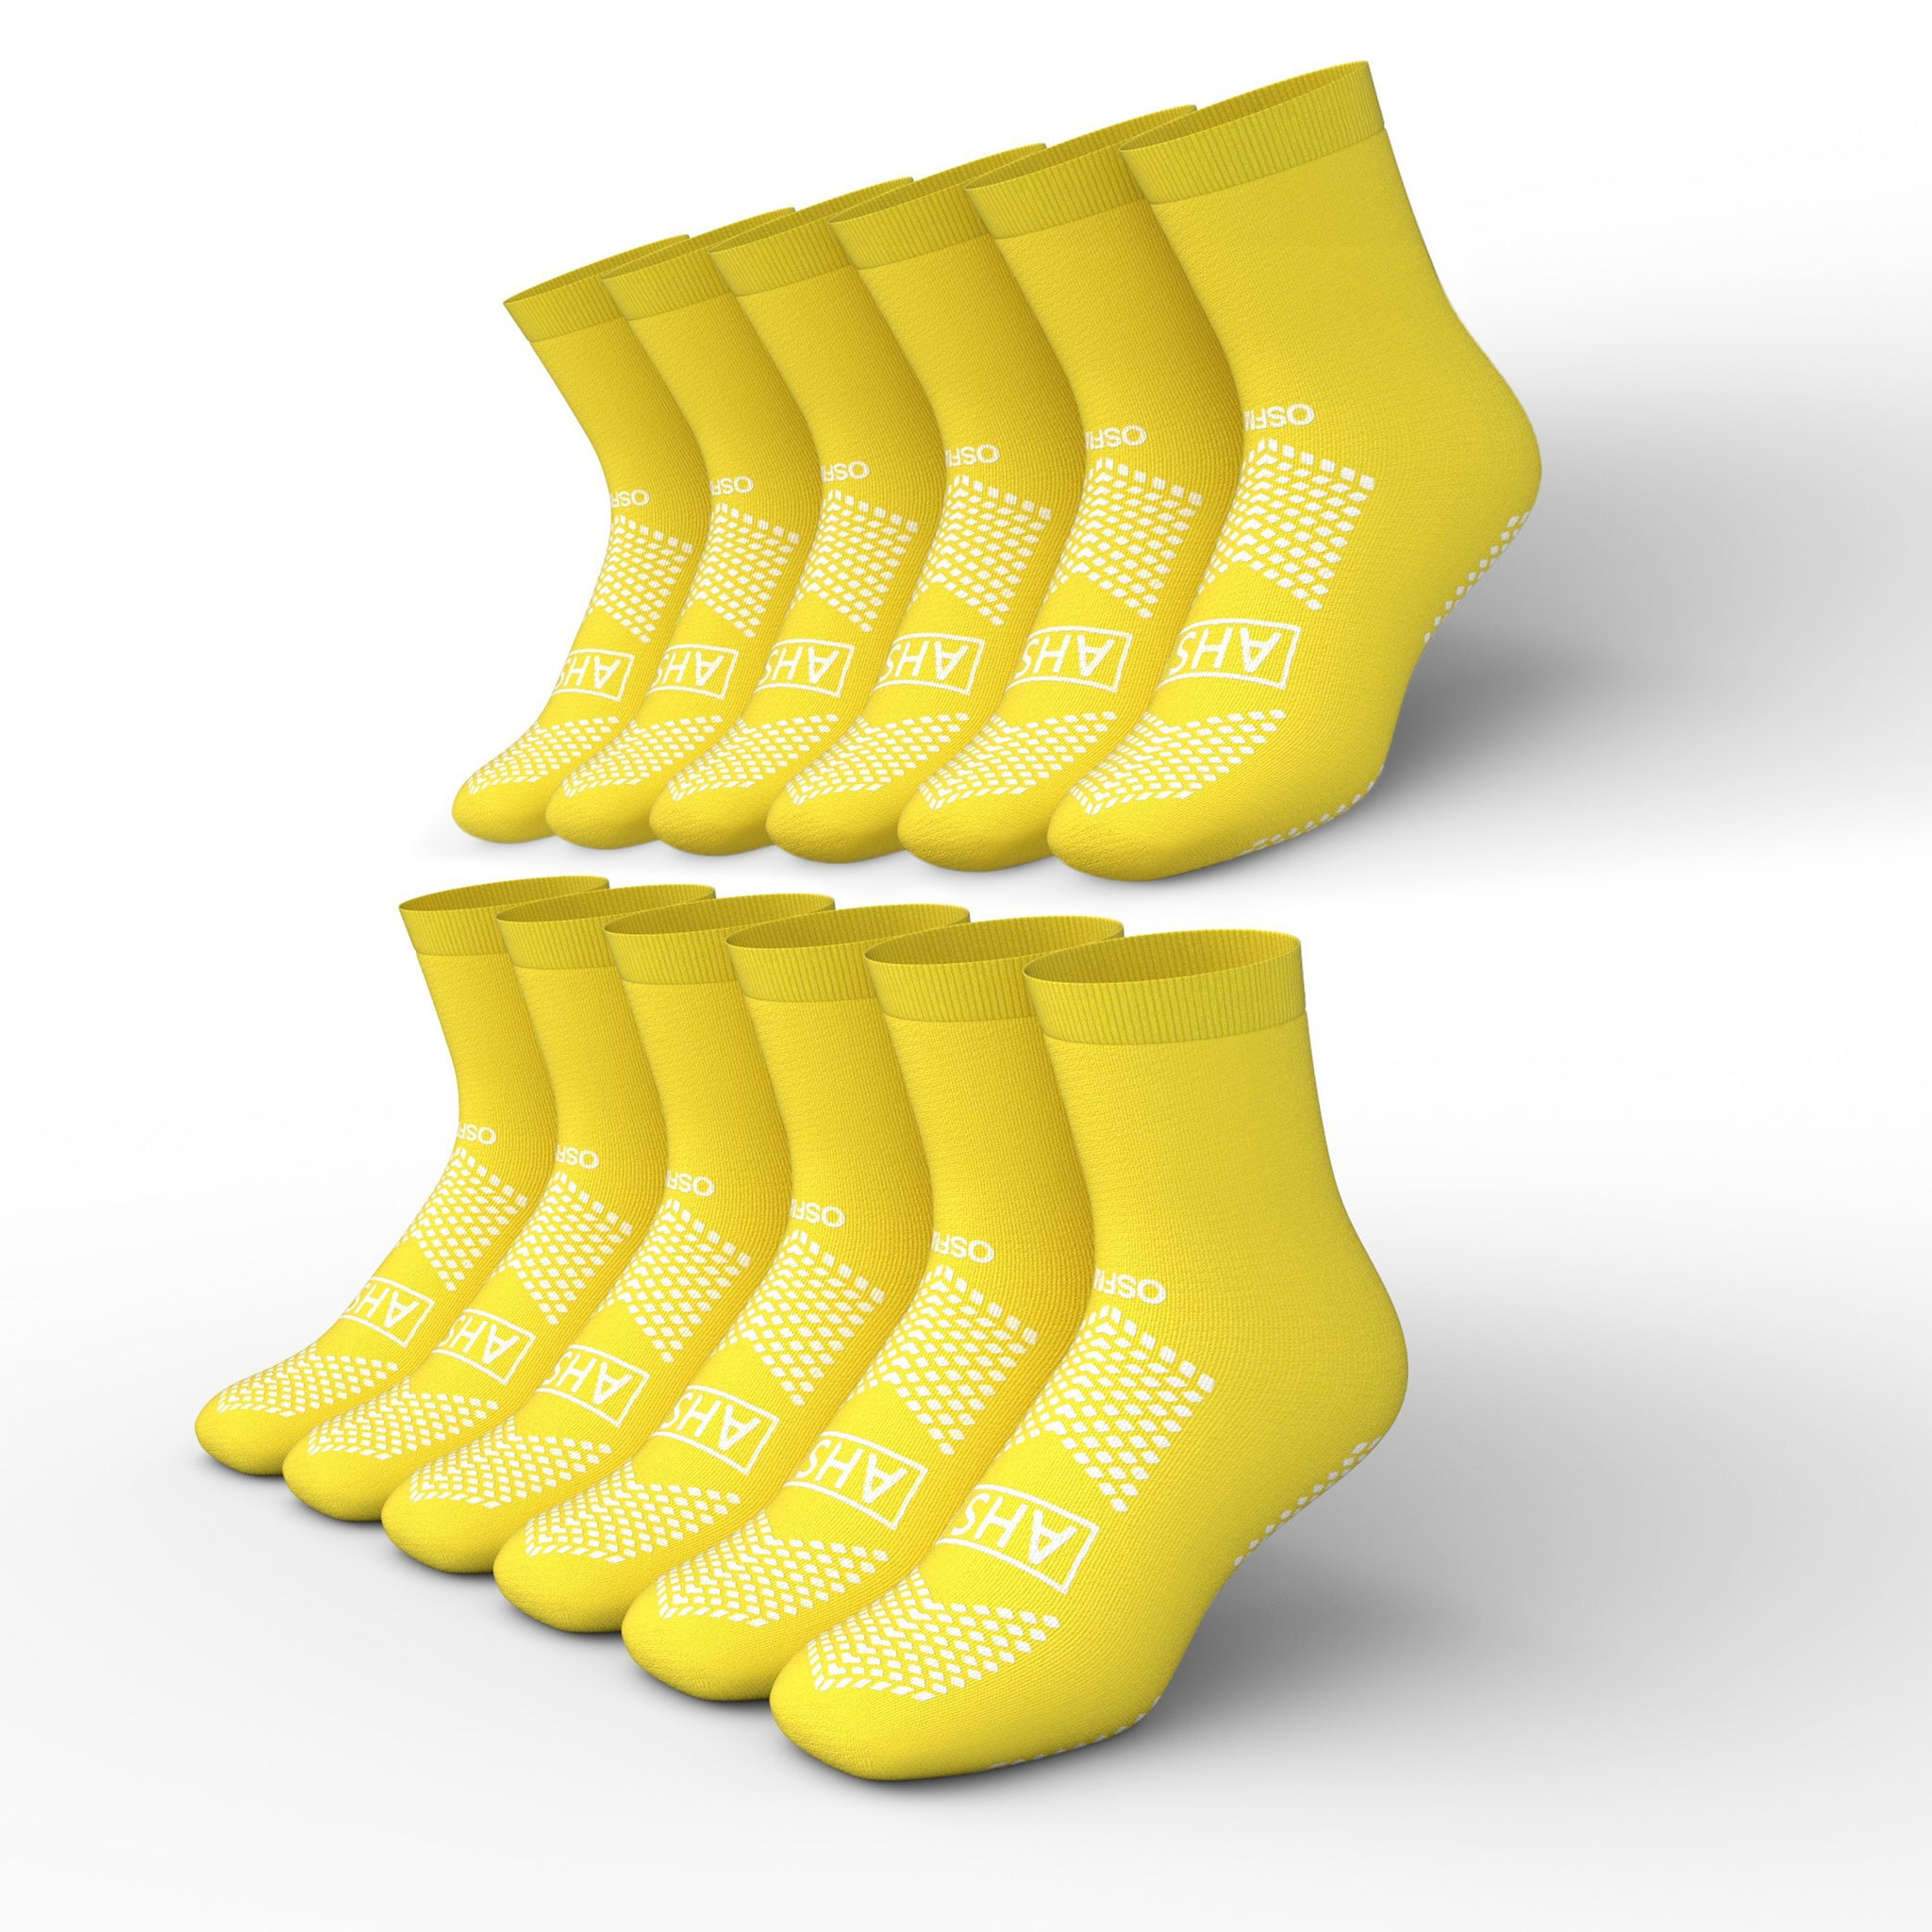 AHS Grippy Socks, Yellow Hospital Socks One Size Fits Most